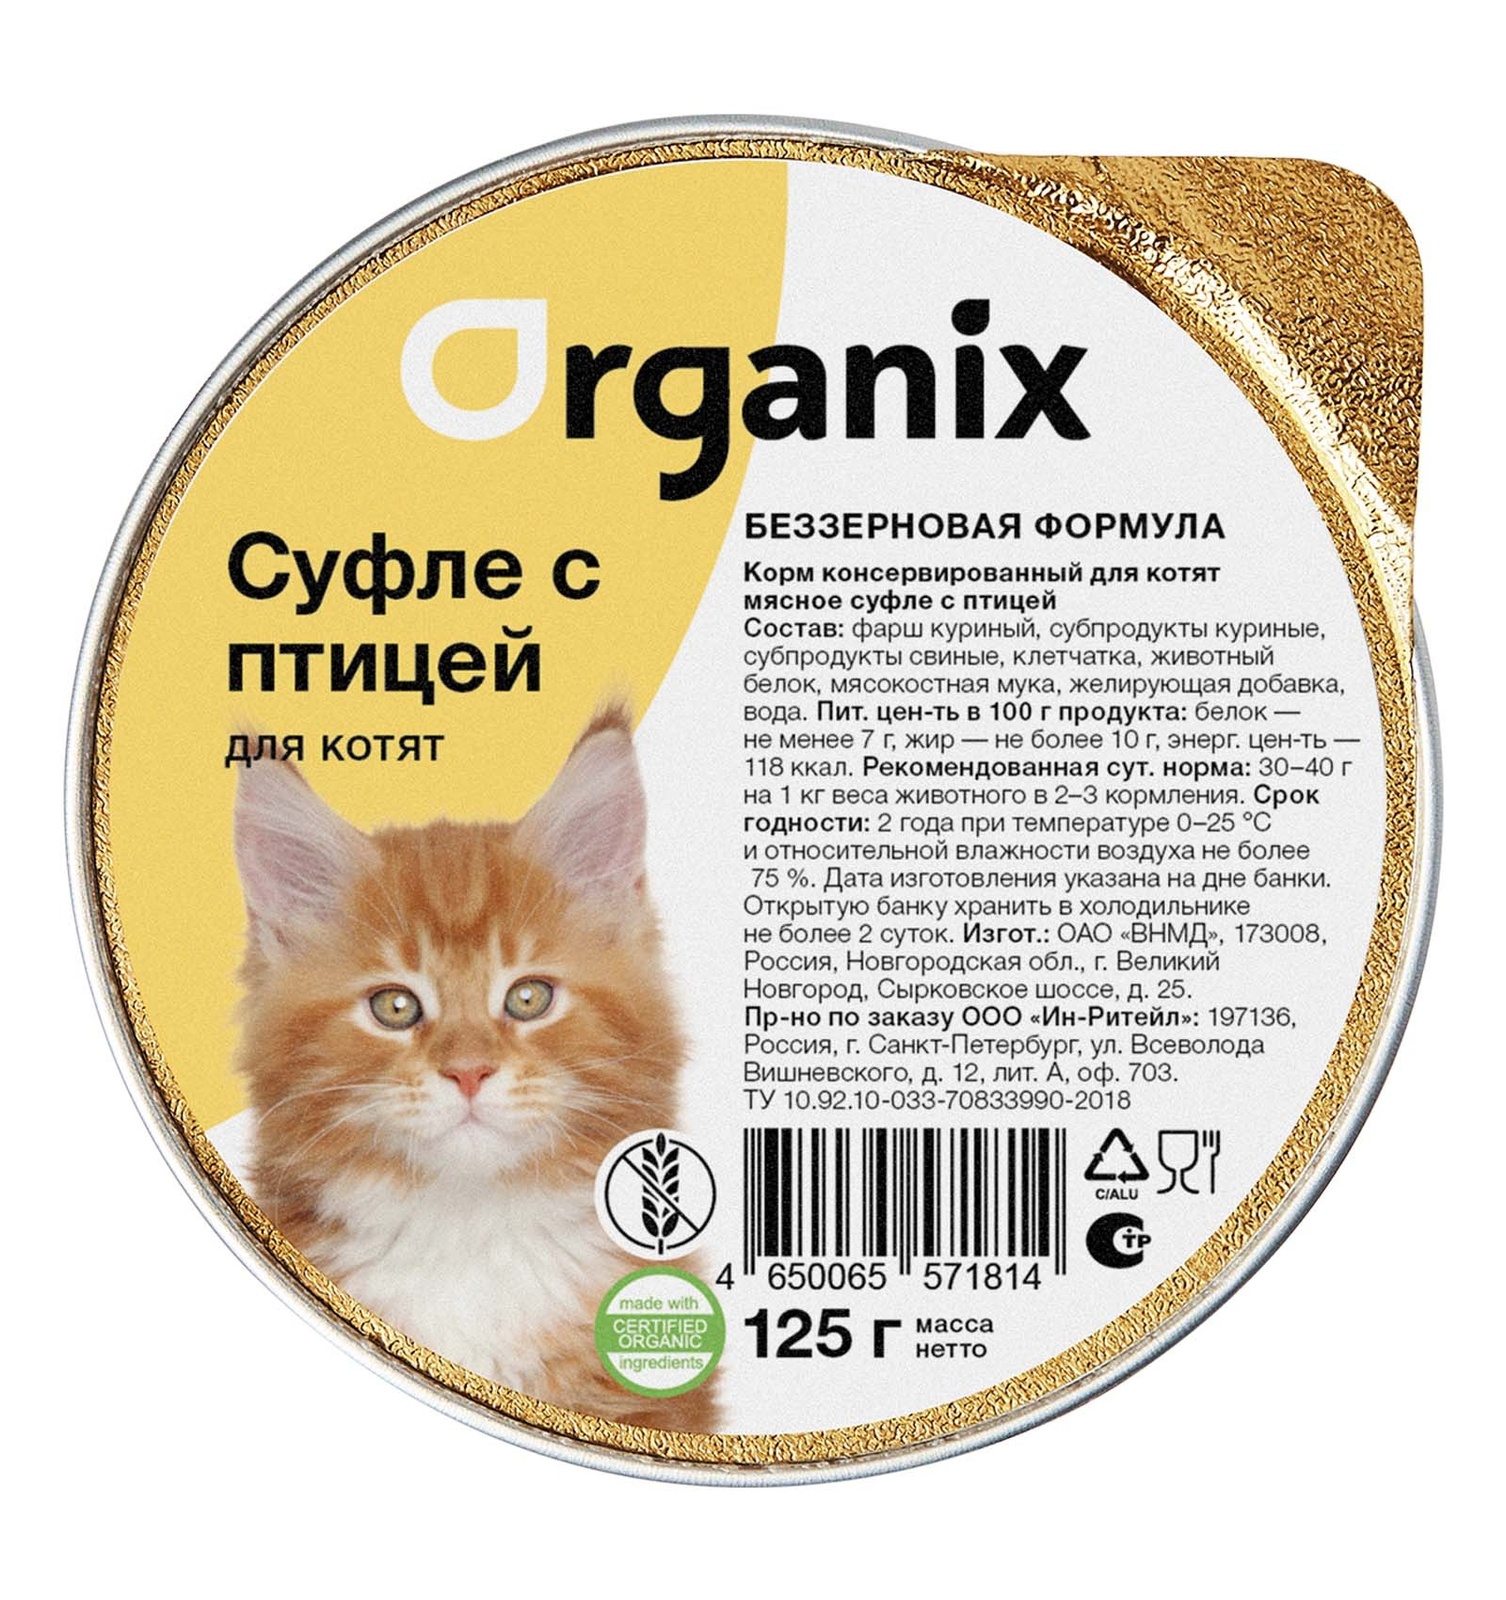 Organix мясное суфле с птицей для котят (125 г)